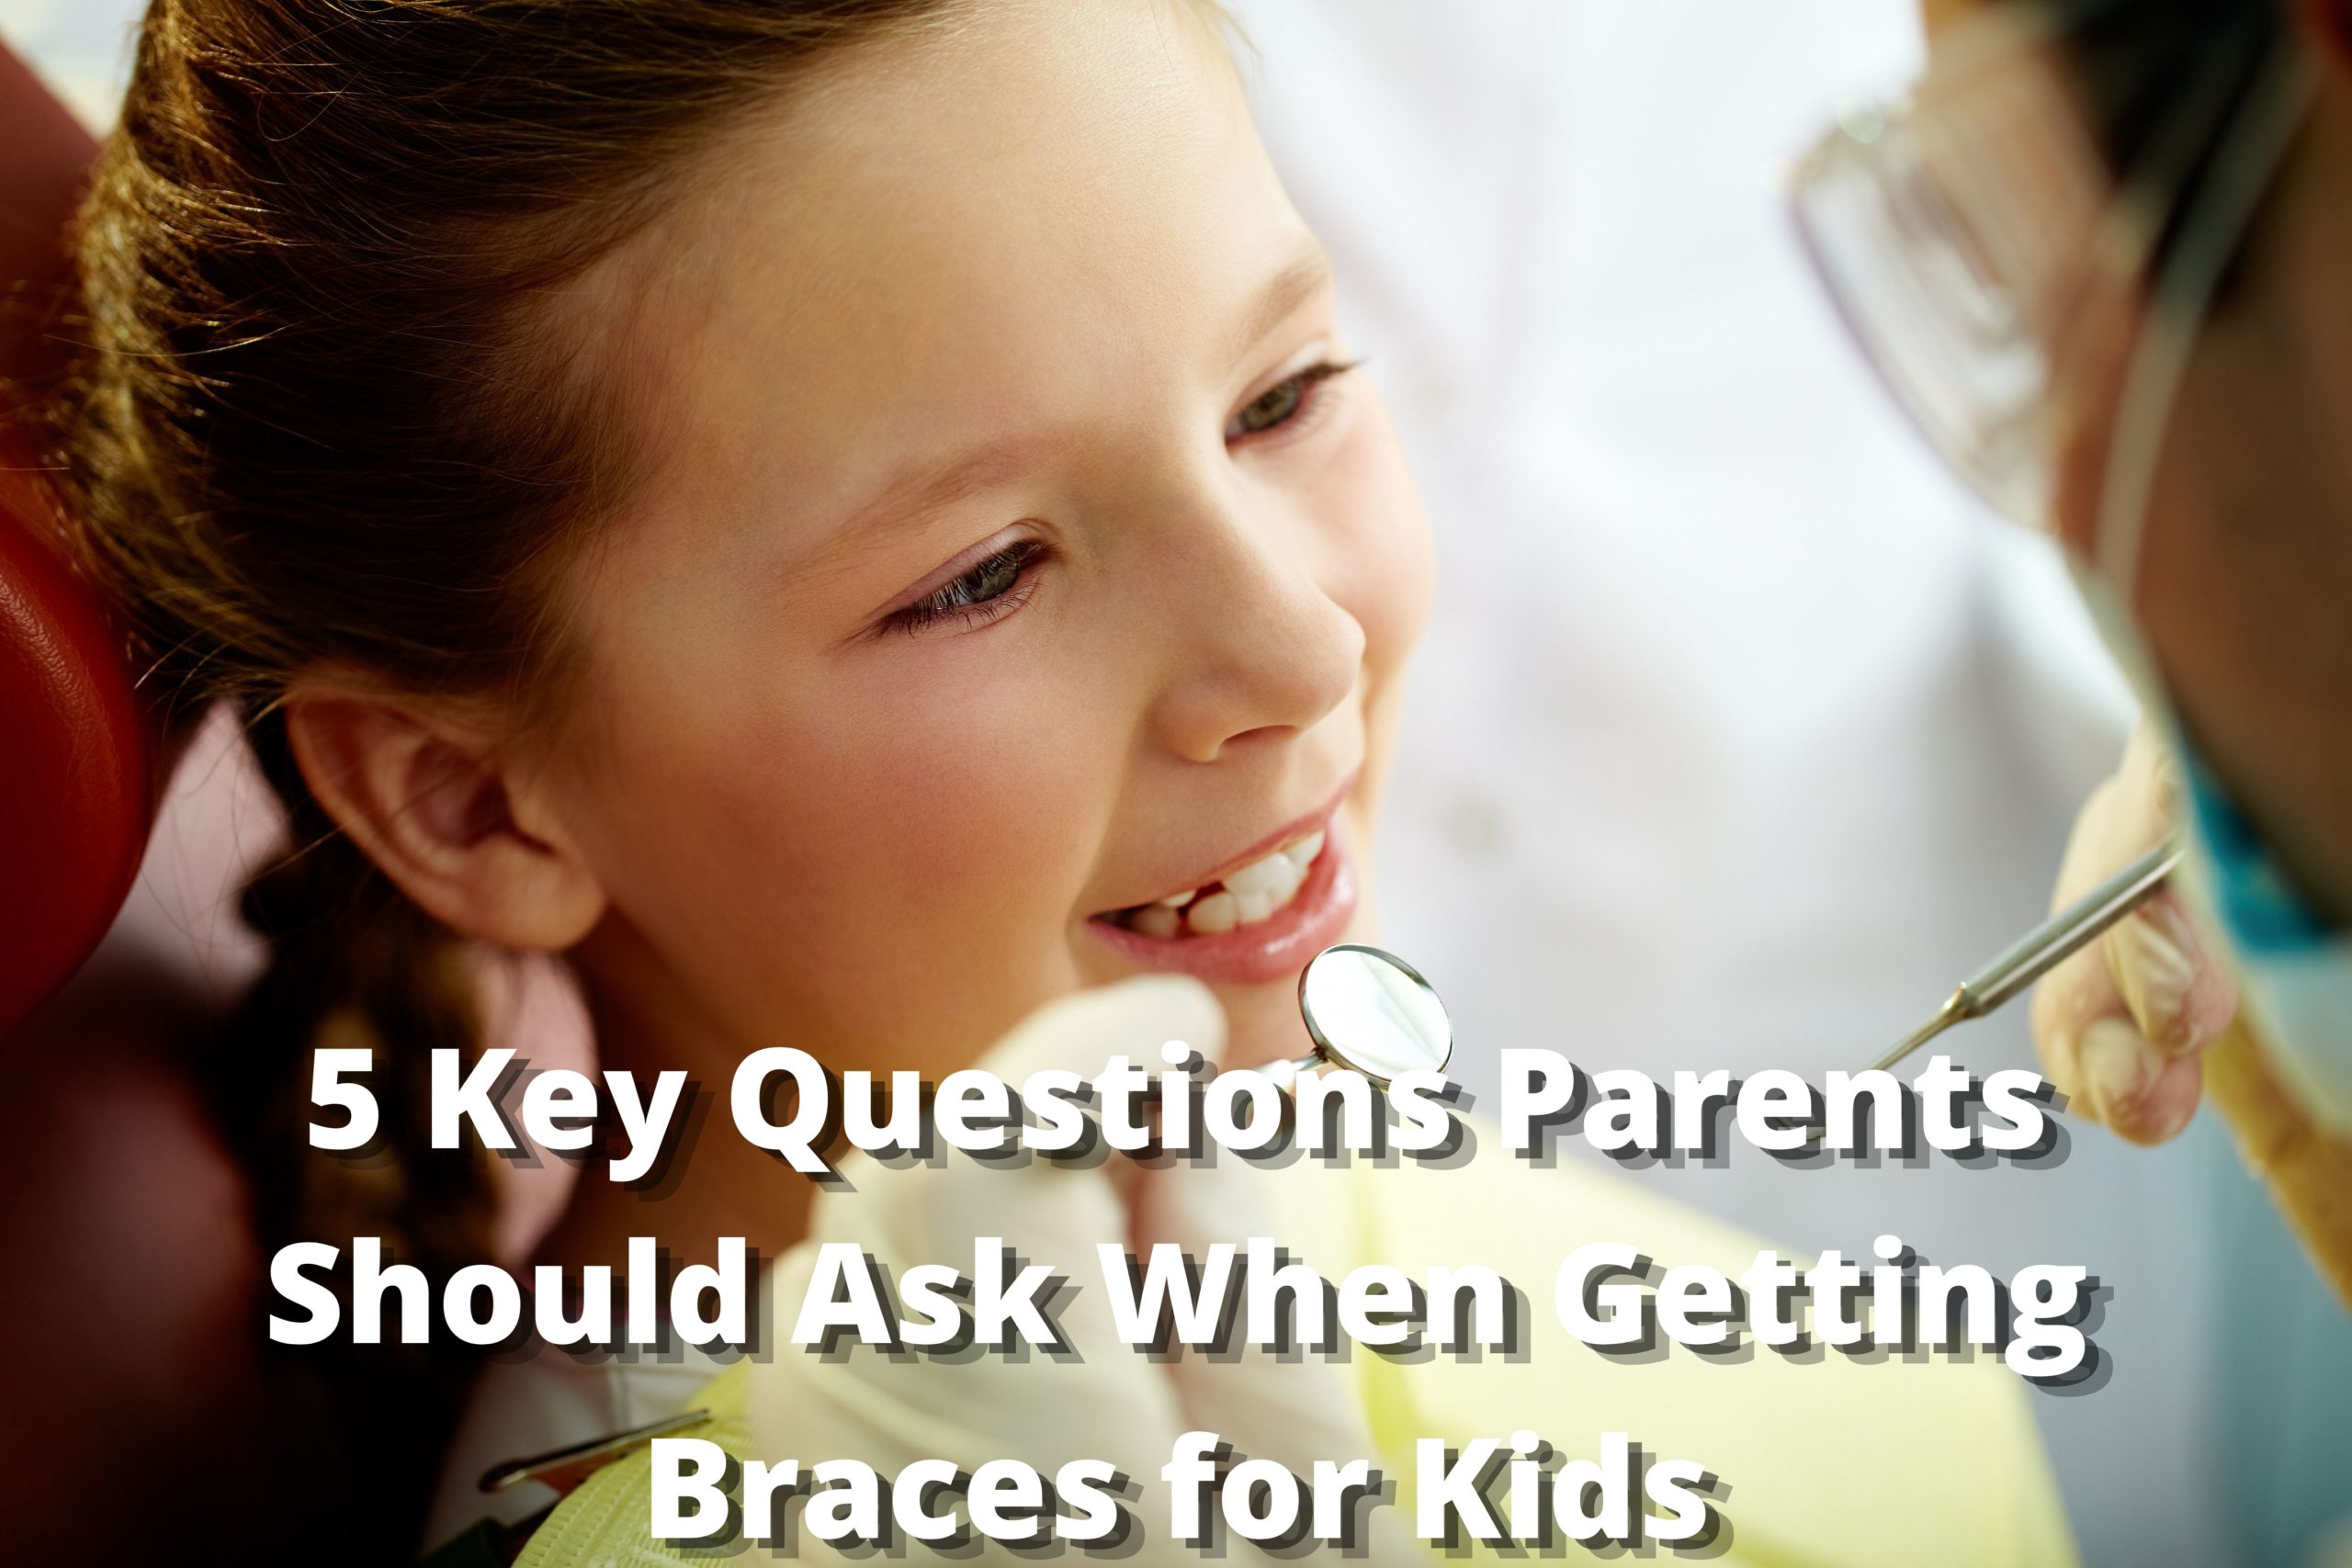 5 Key Questions Parents Should Ask When Getting Braces for Kids